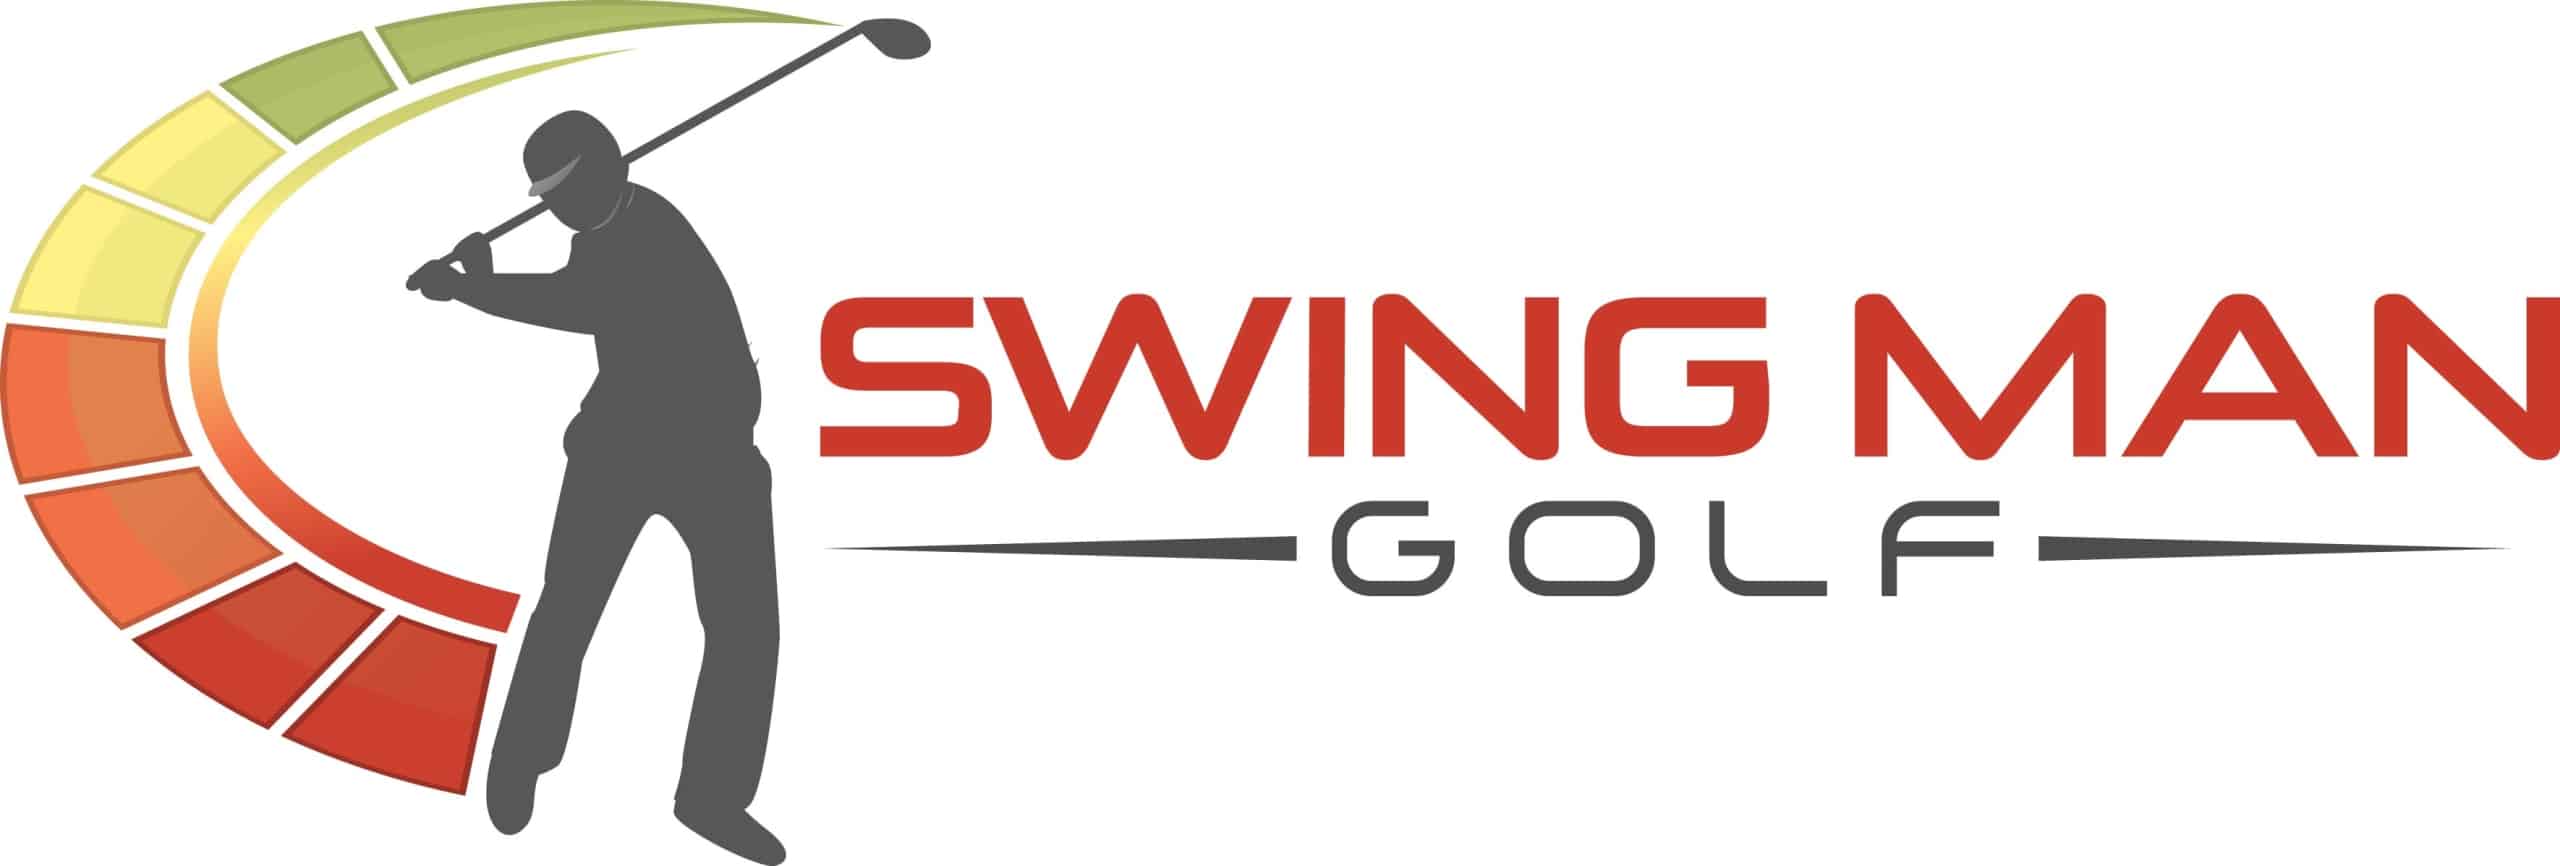 Swingman Golf Review